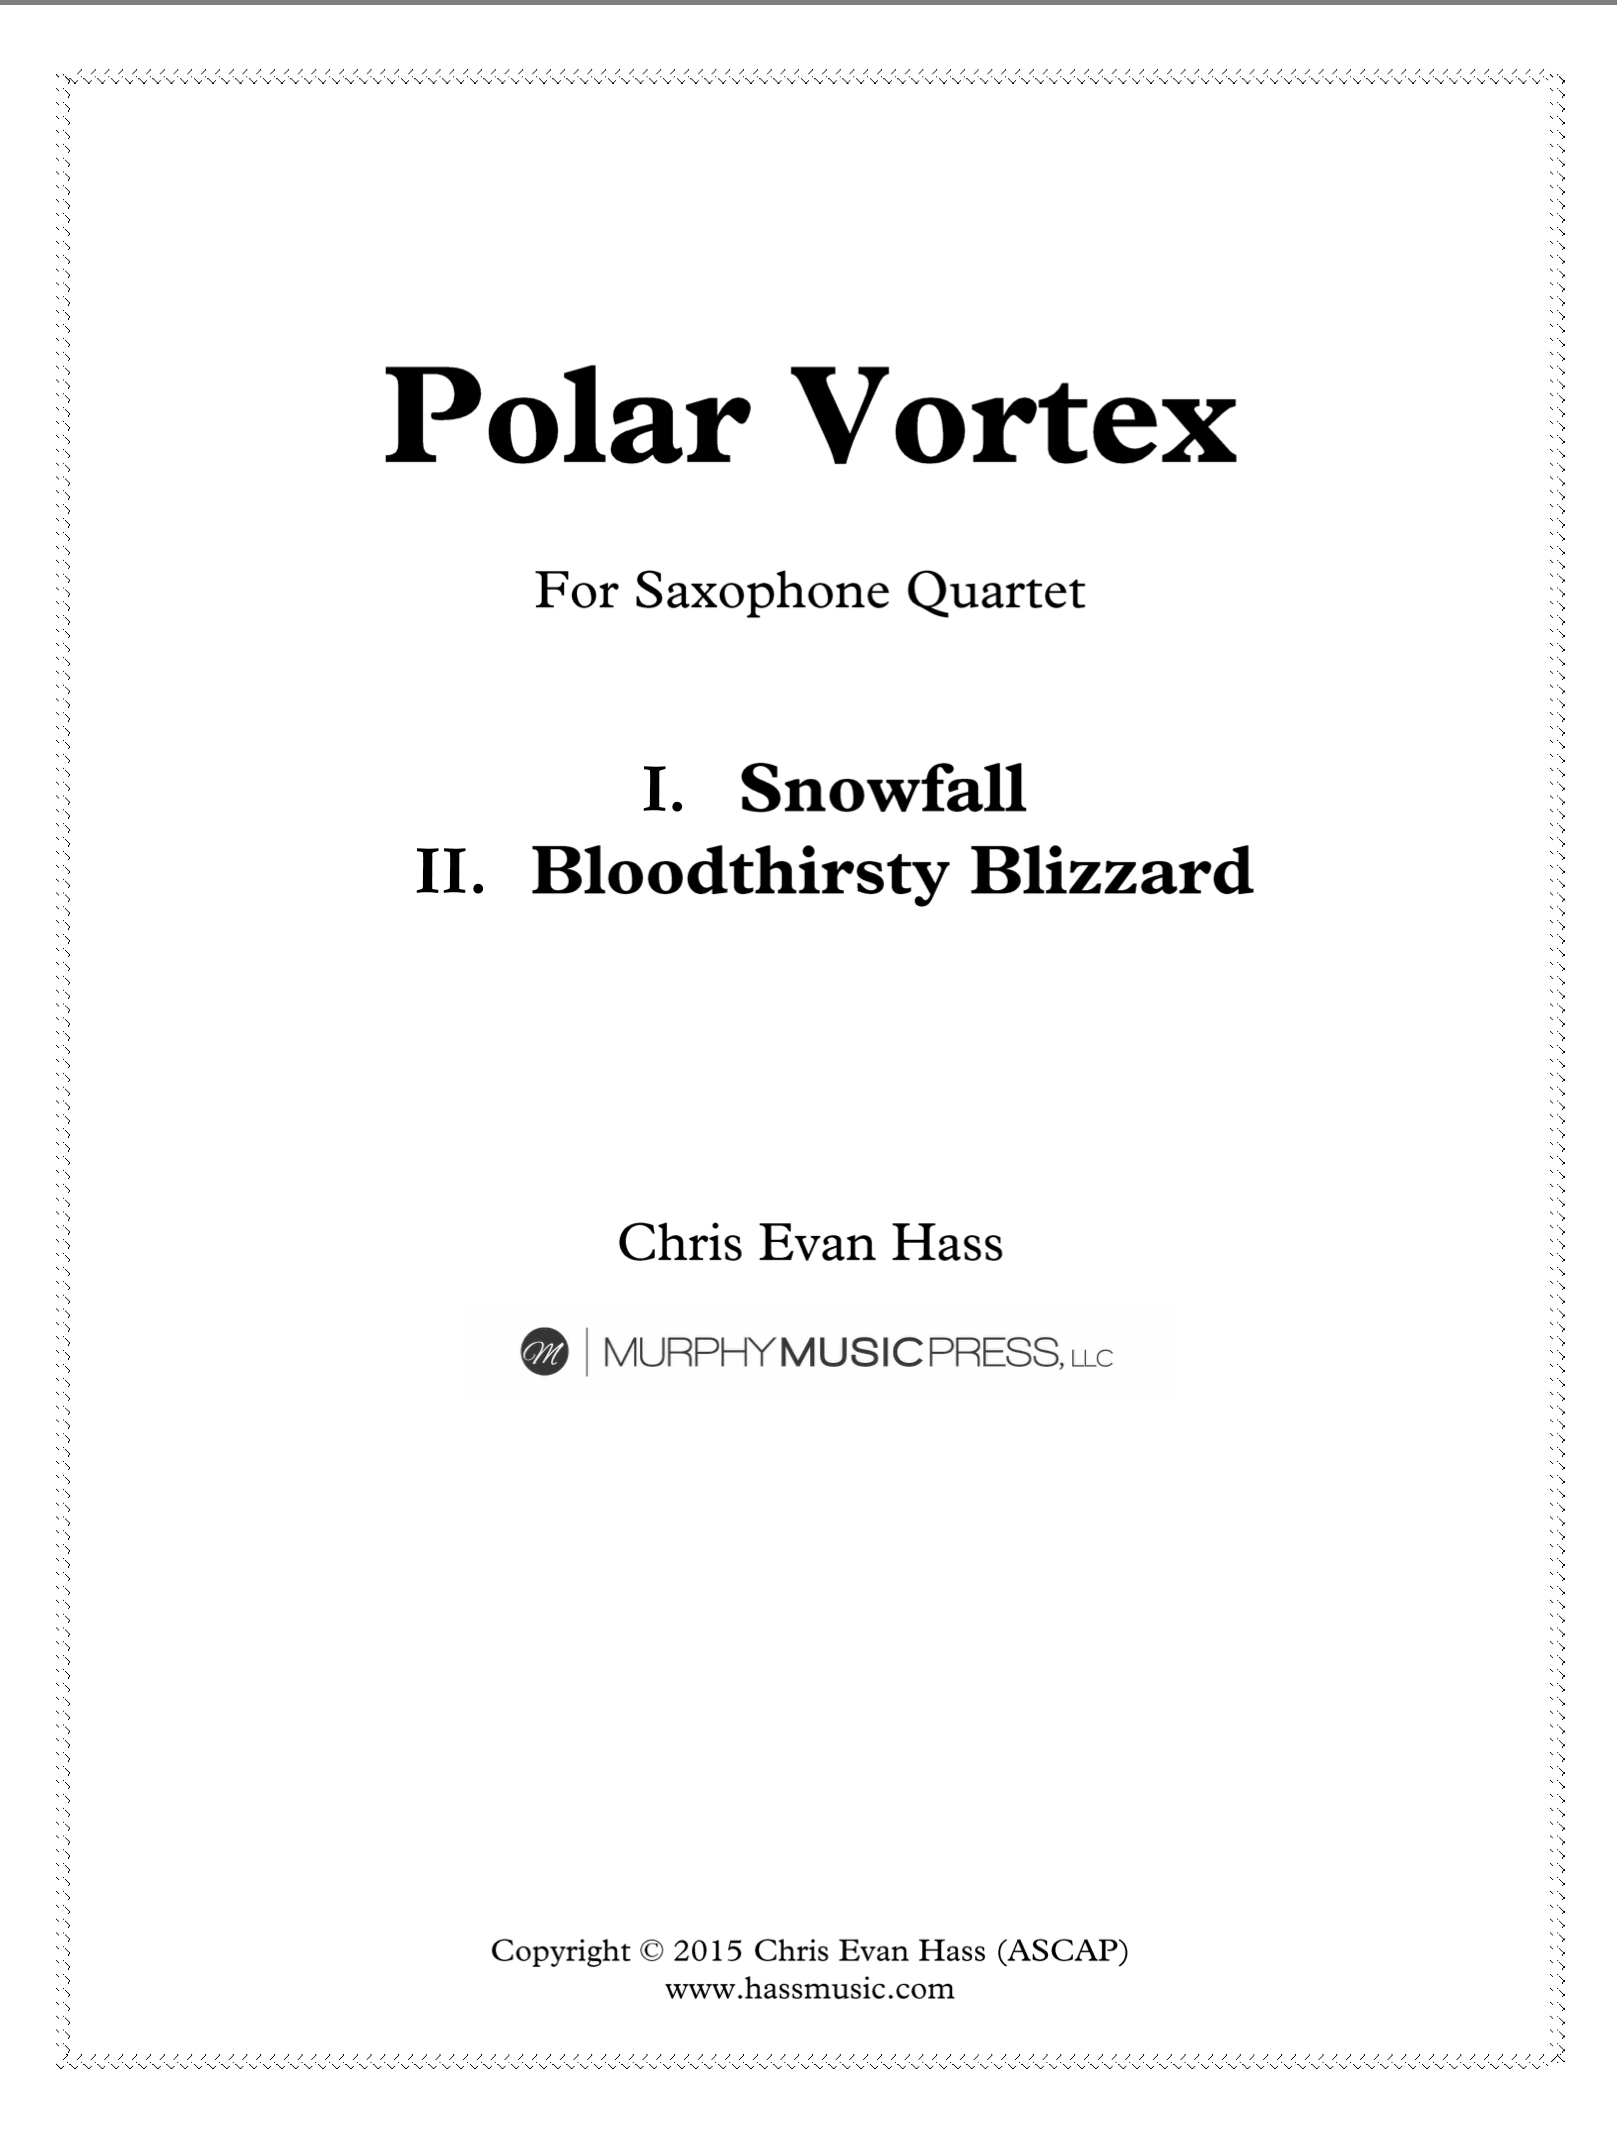 Polar Vortex by Chris Hass 